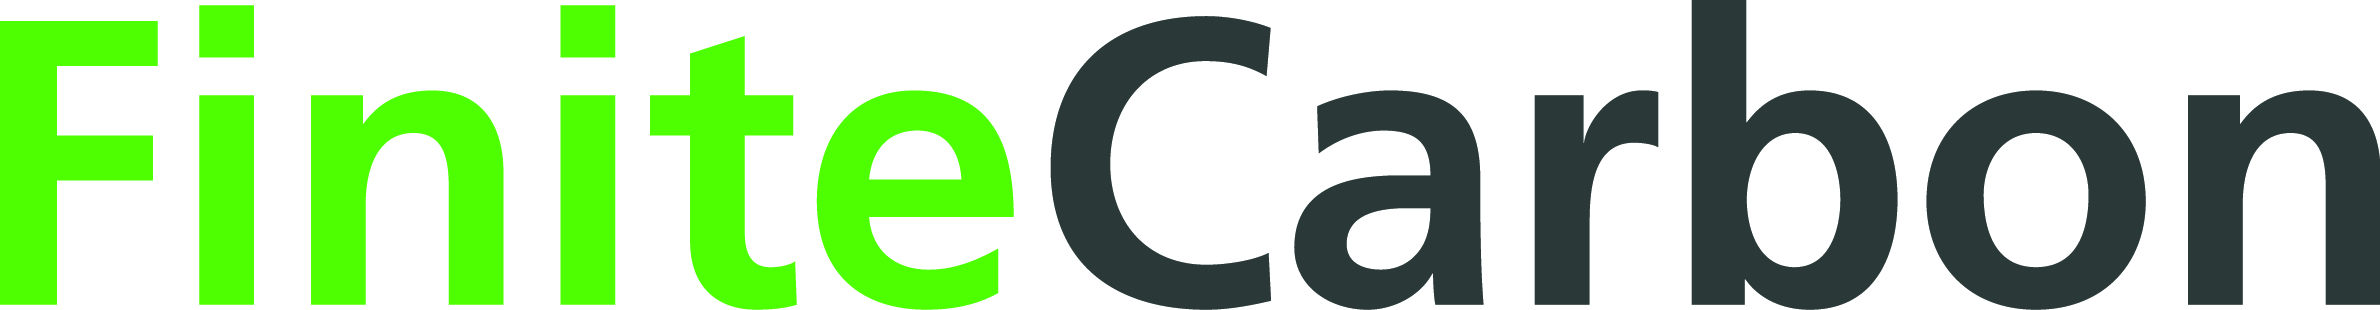 Finite Carbon Logo